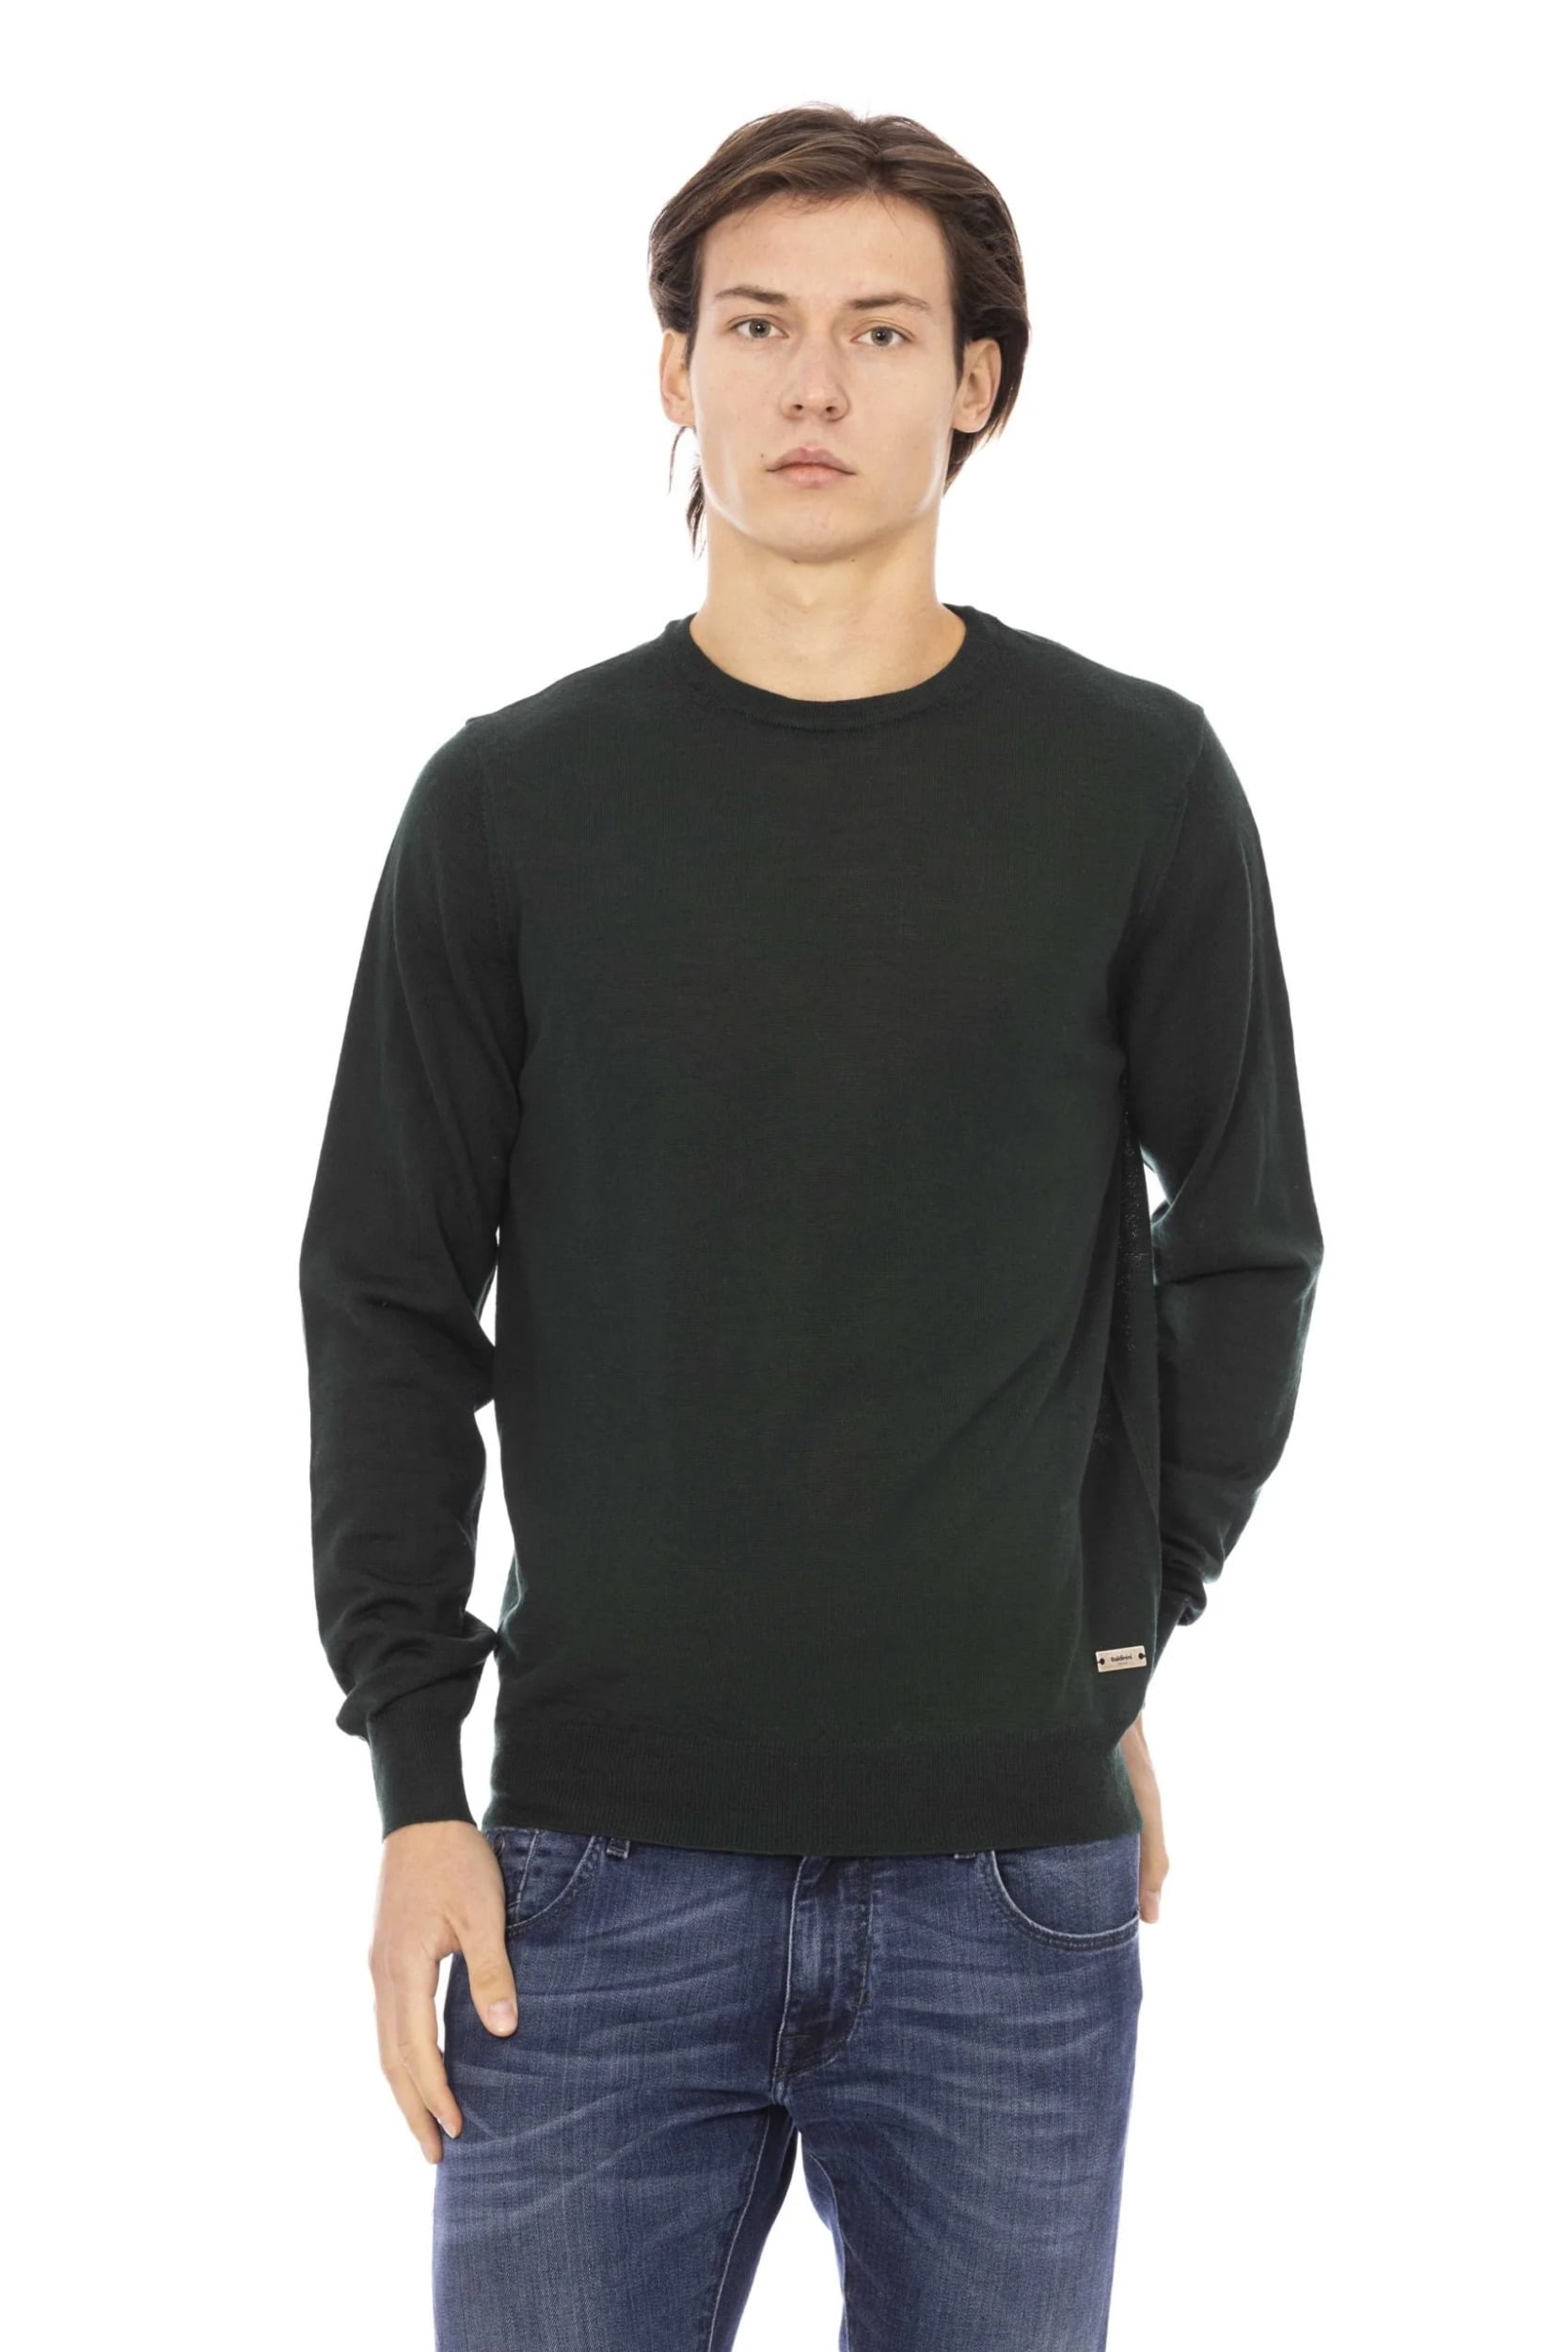 Baldinini Trend Green Sweater - Walmart.com